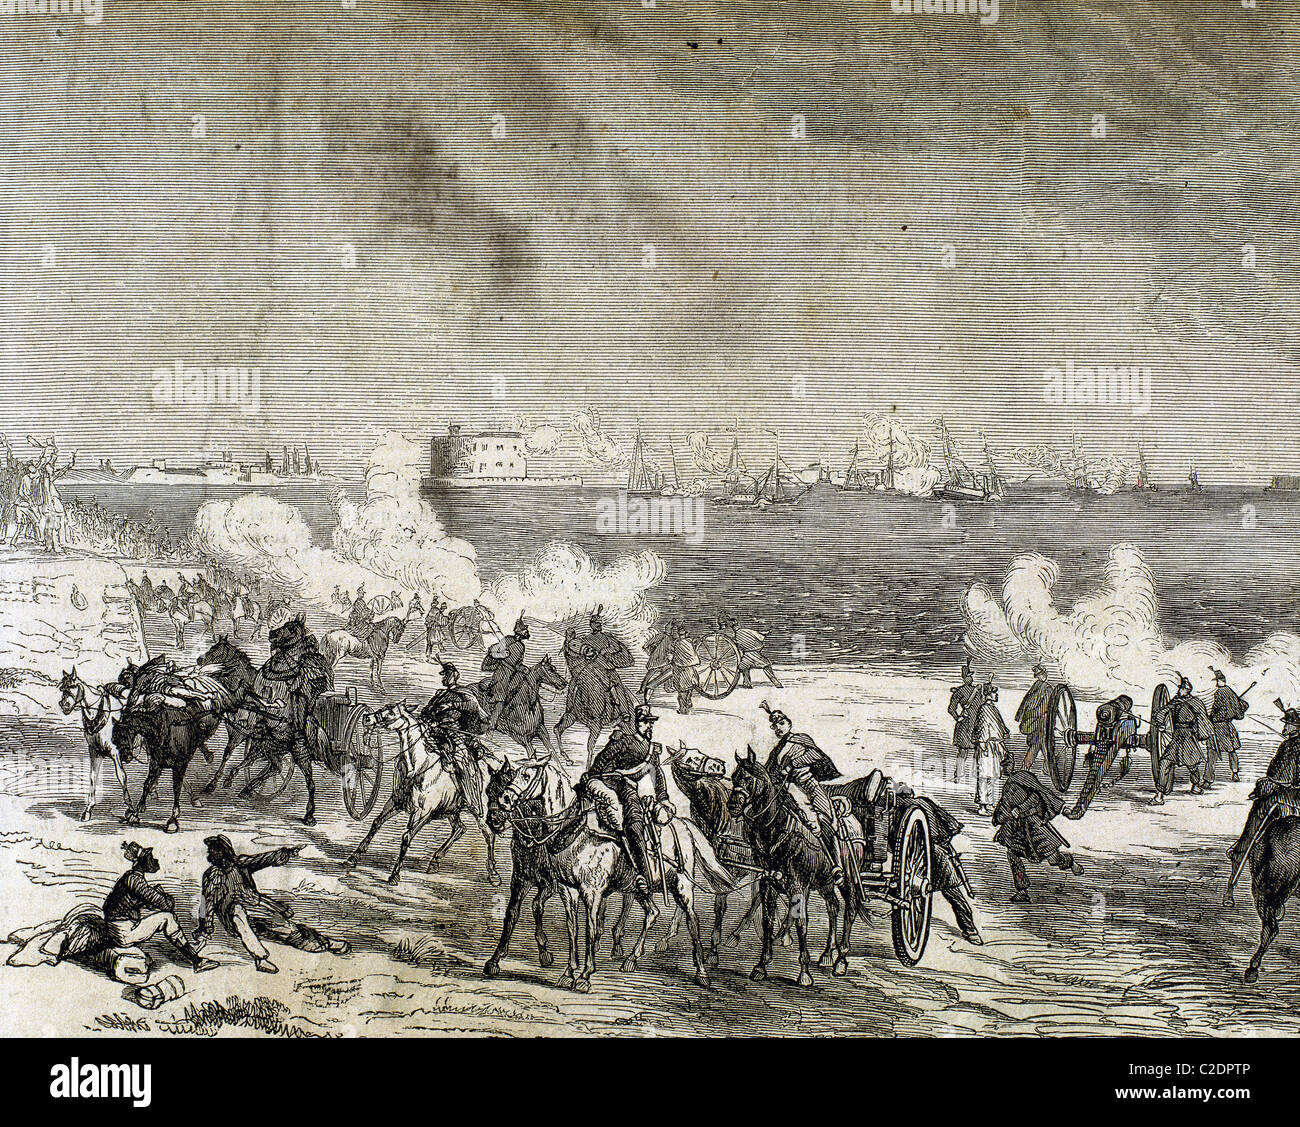 United States. The American Civil War (1861-1865). Stock Photo